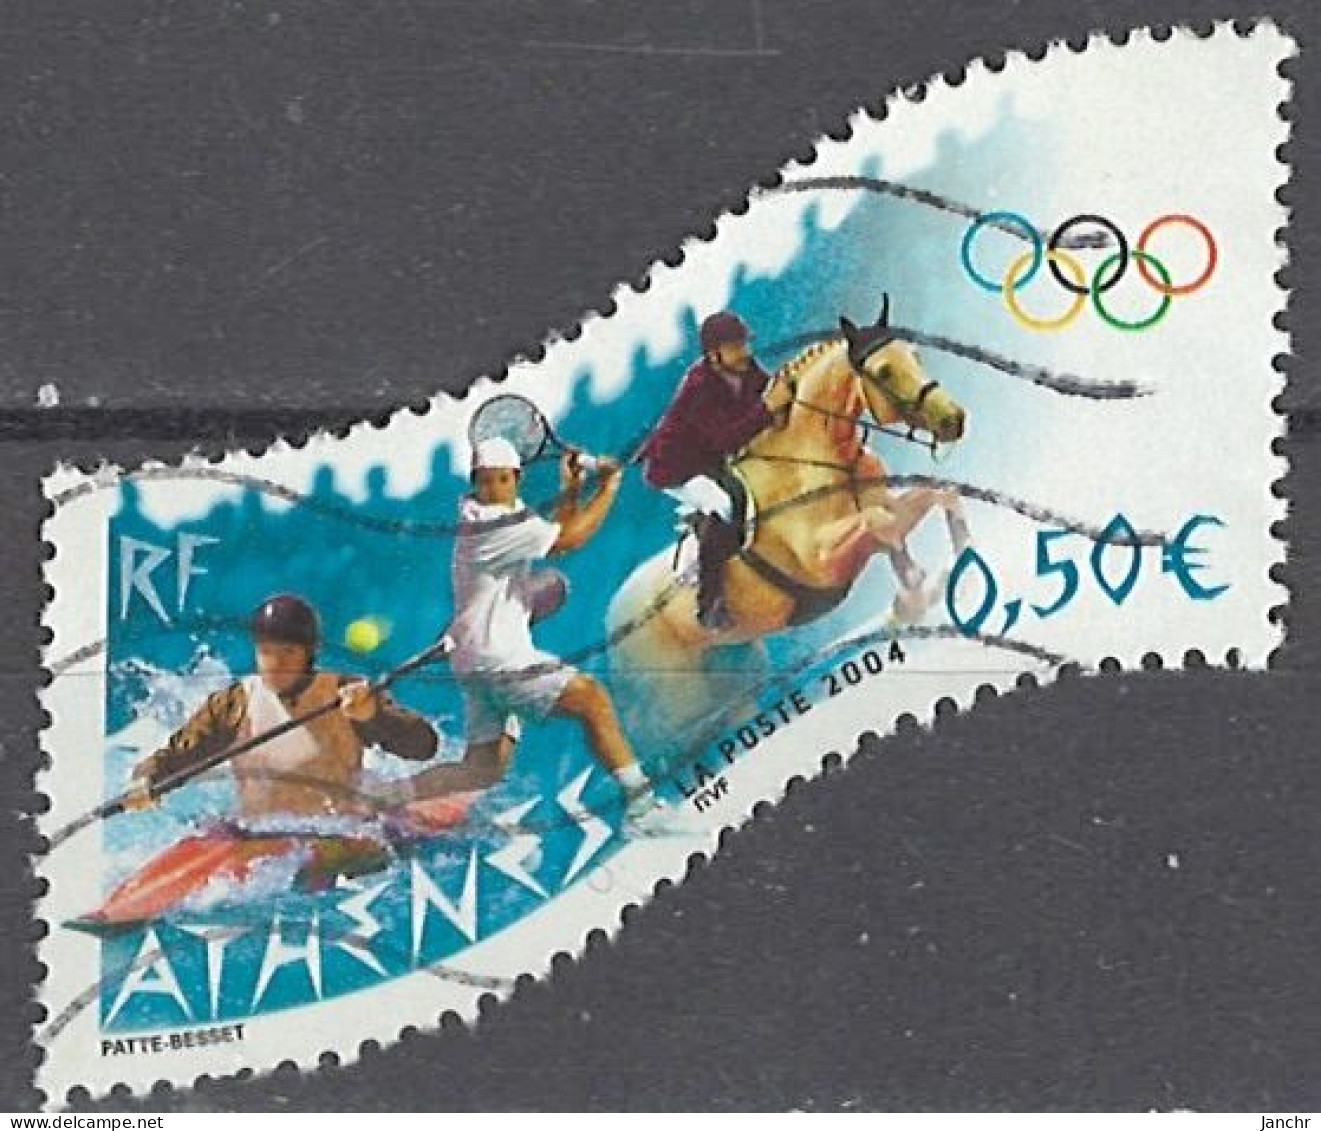 France Frankreich 2004. Mi.Nr. 3830, Used O - Used Stamps